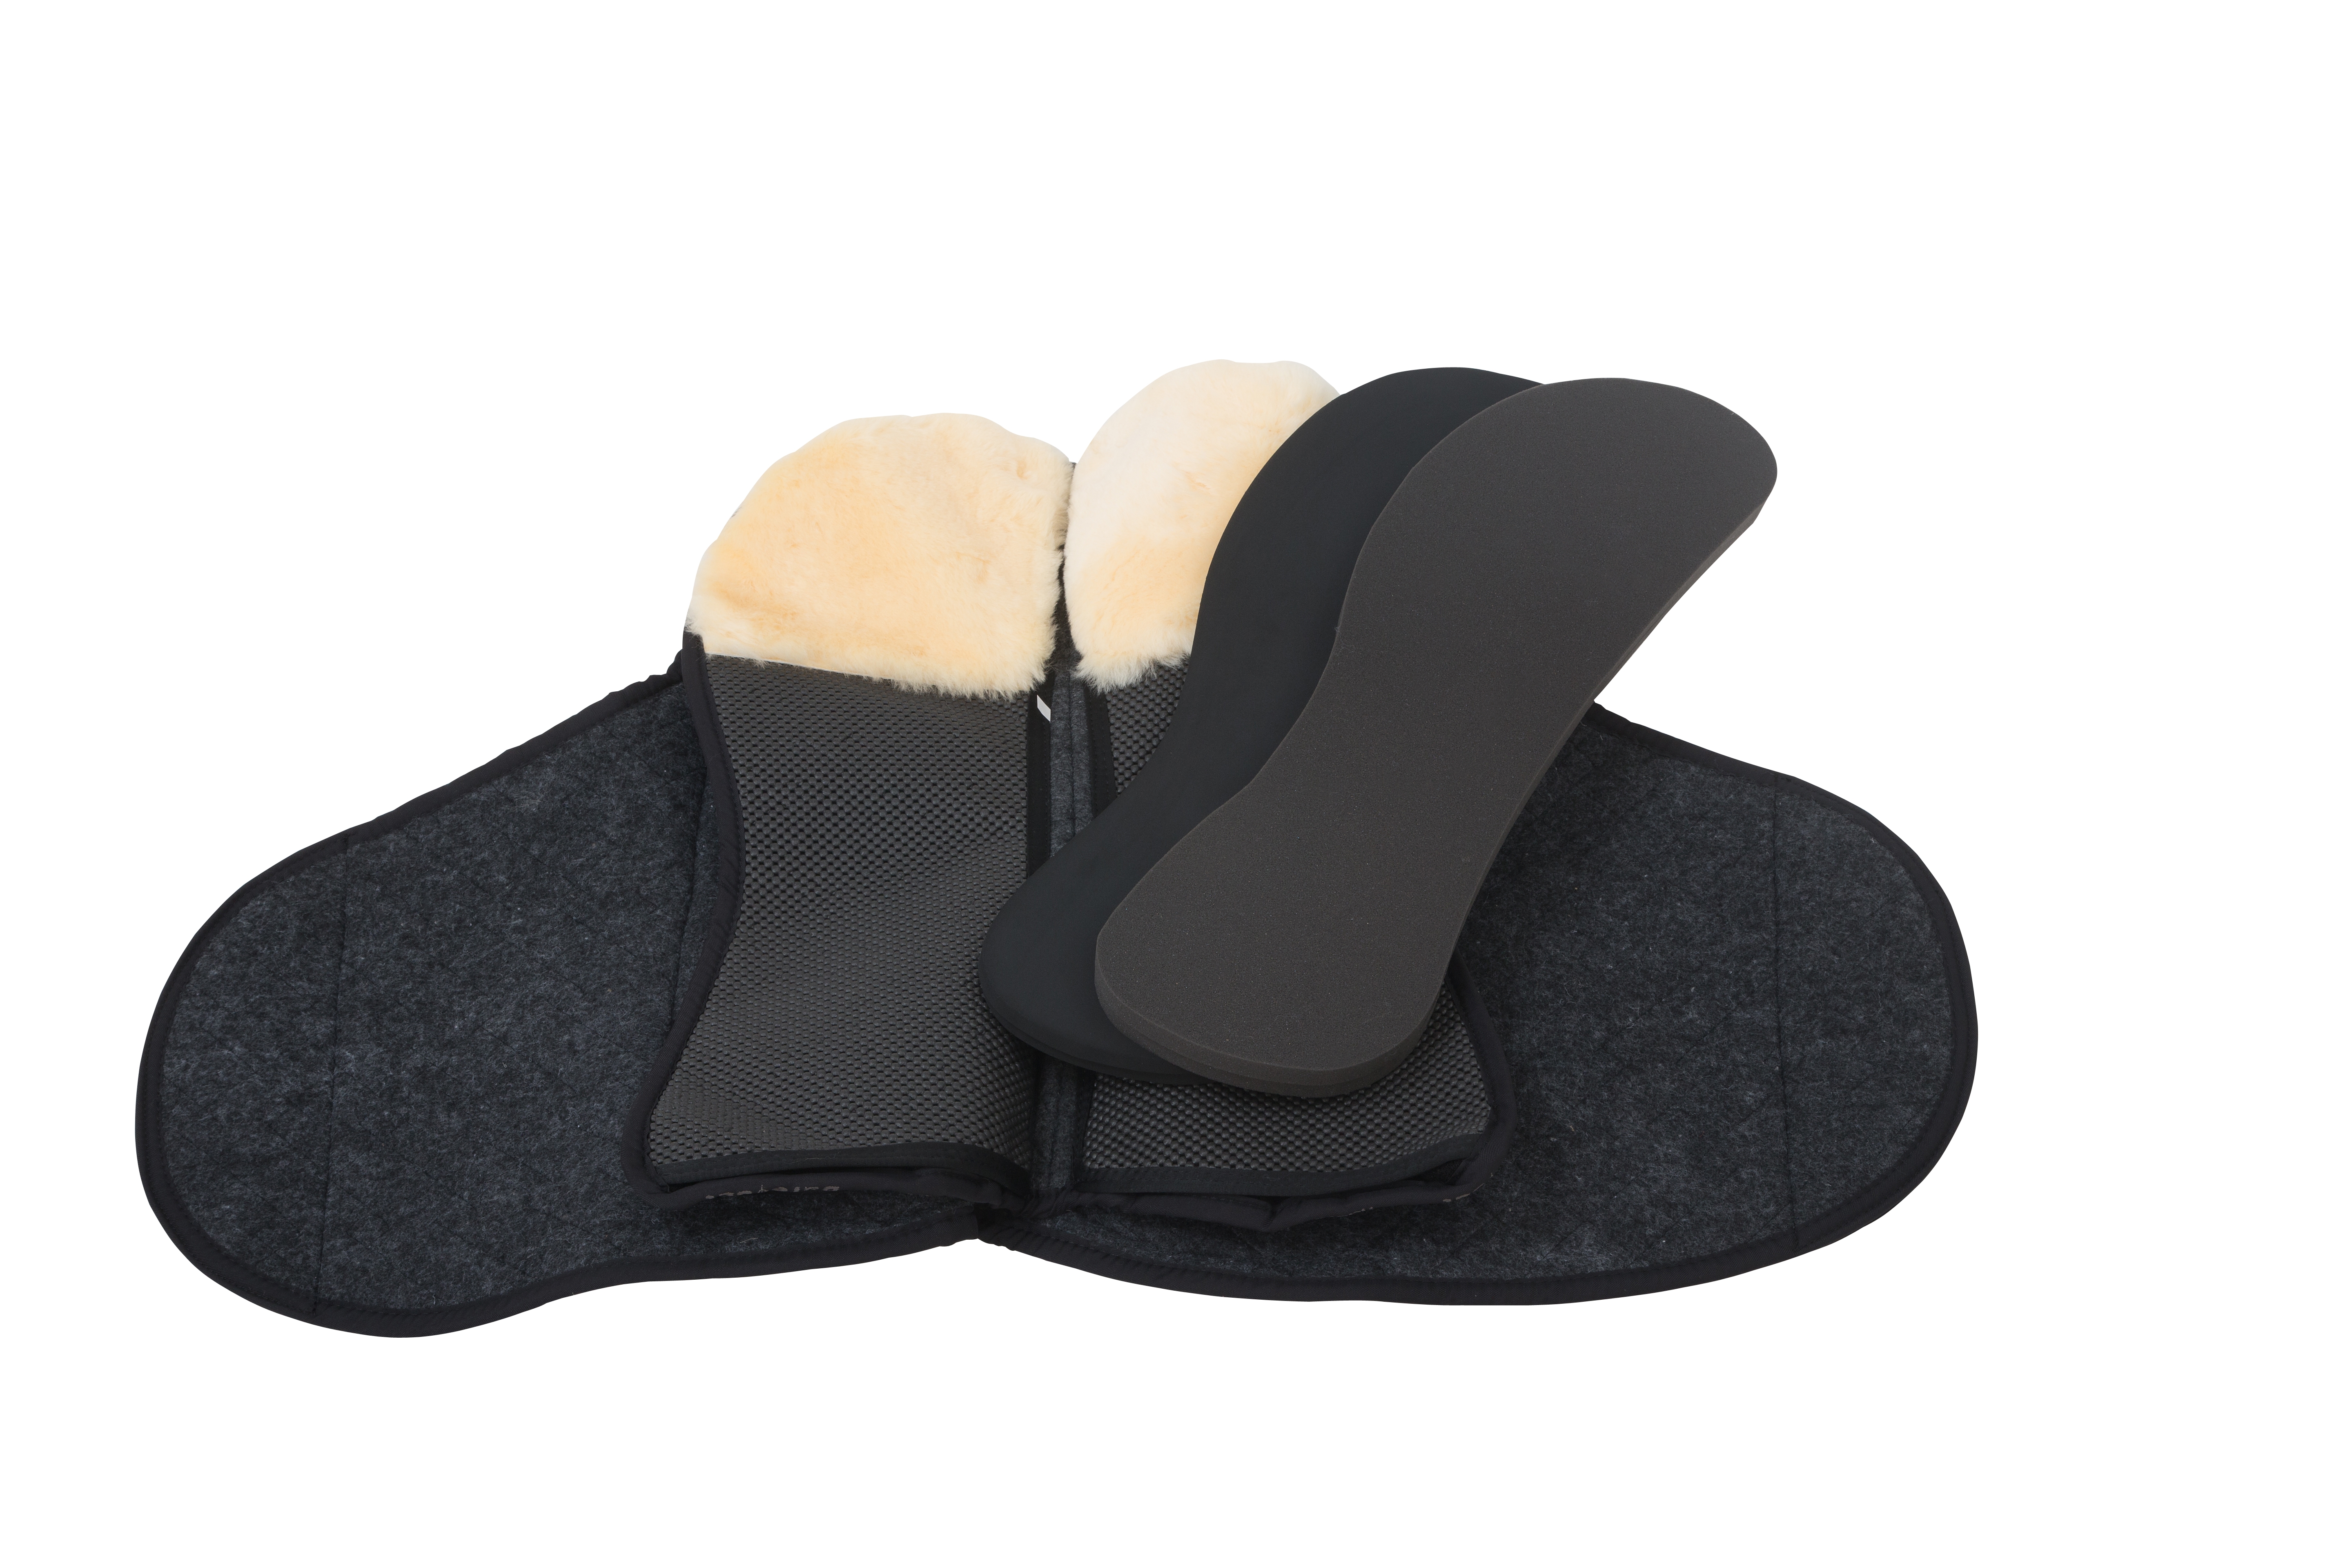 Barefoot Saddle Pad Inserts - Memory foam